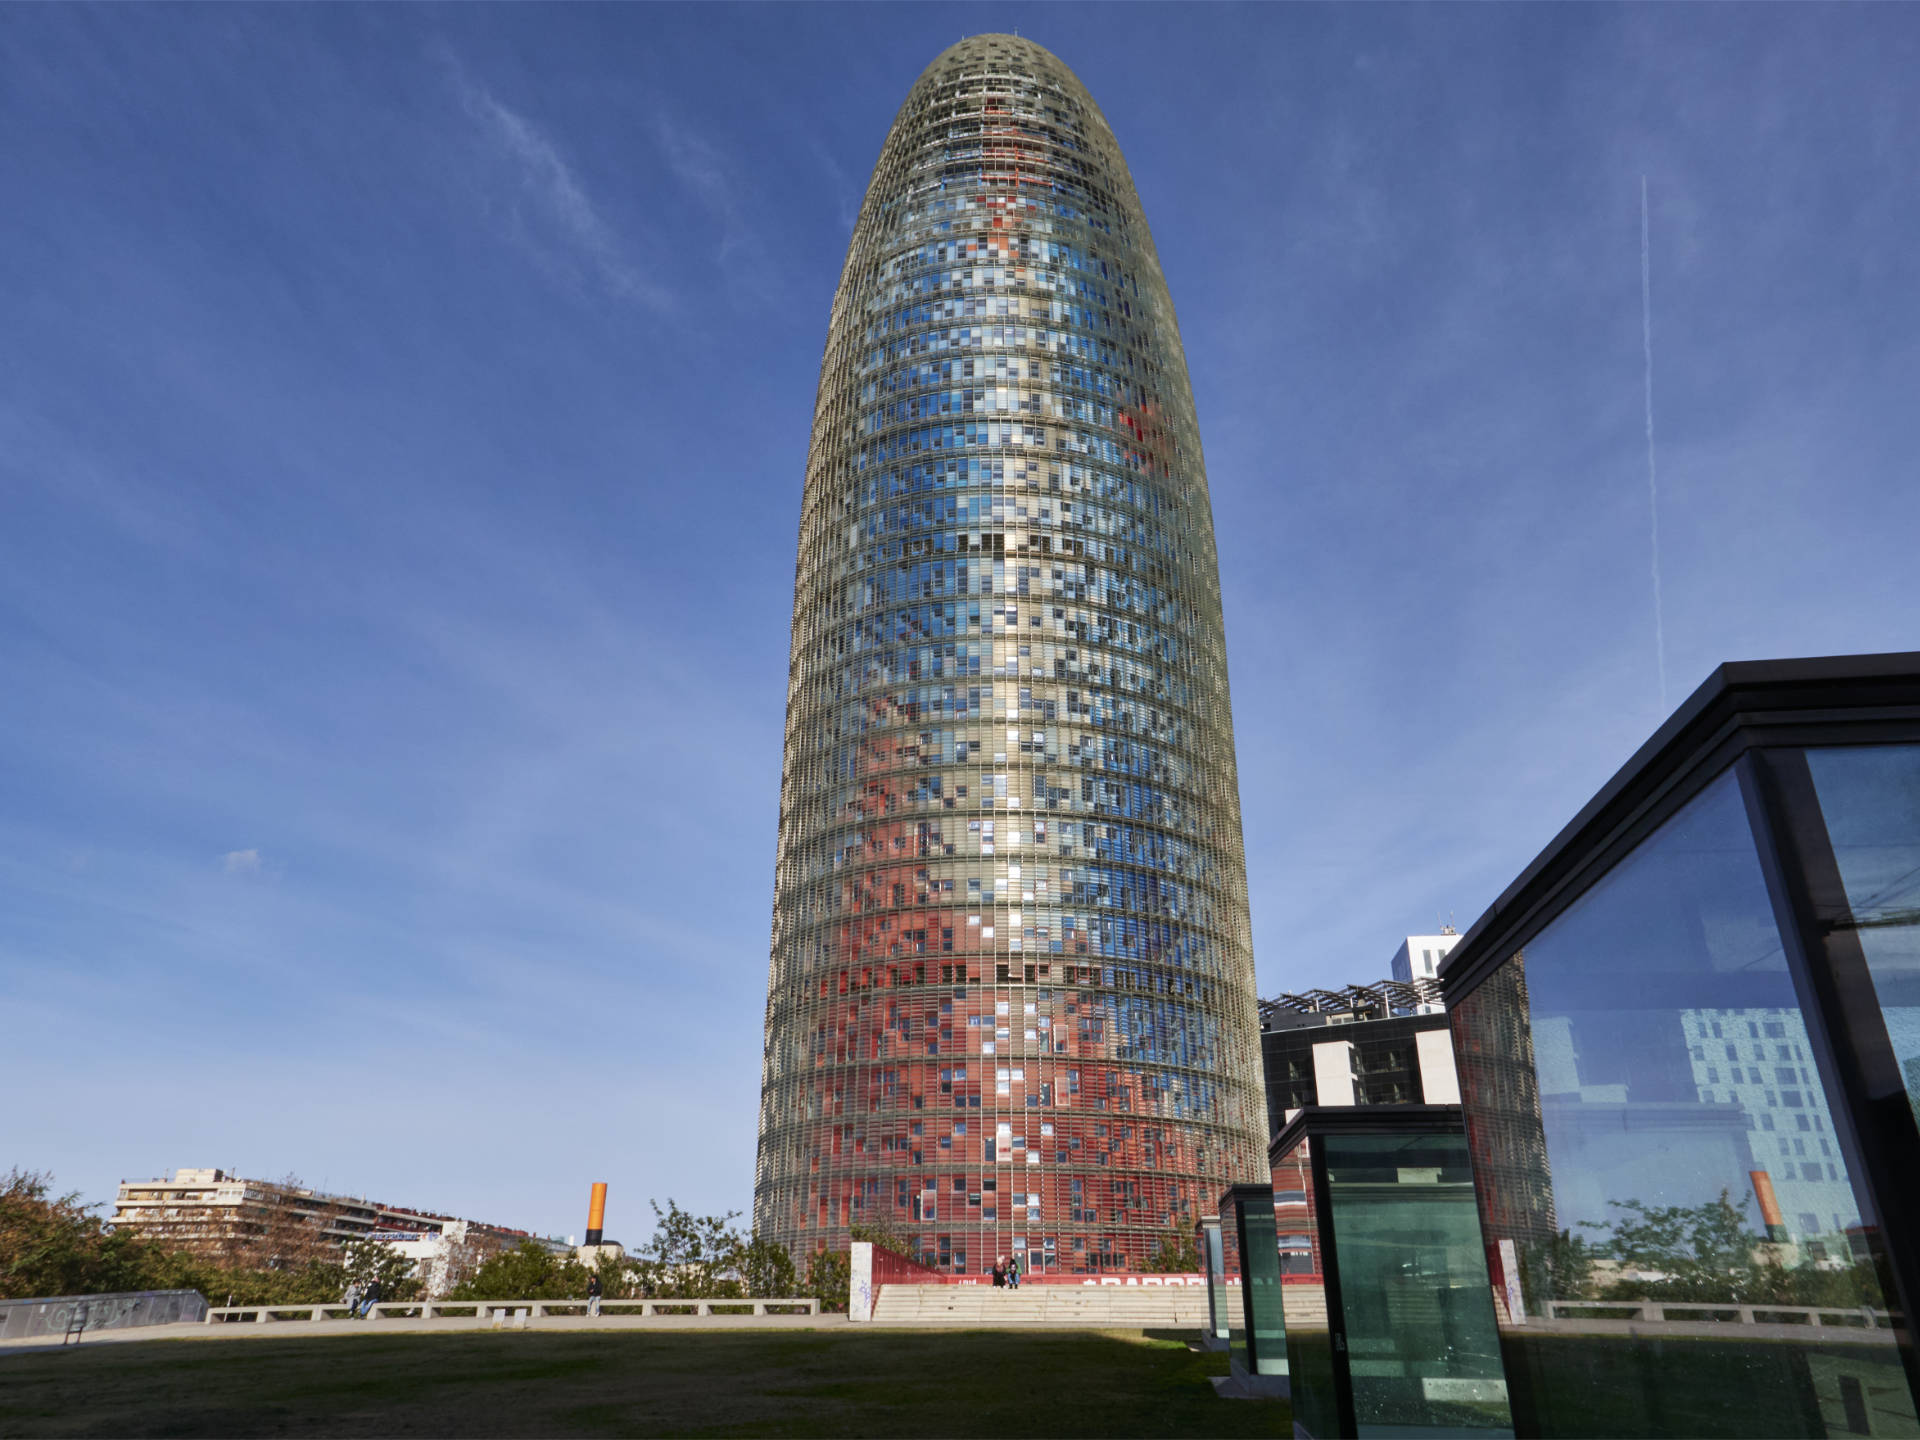 Torre Agbar aka. Torre Glòries + Museu del Disseny de Barcelona.